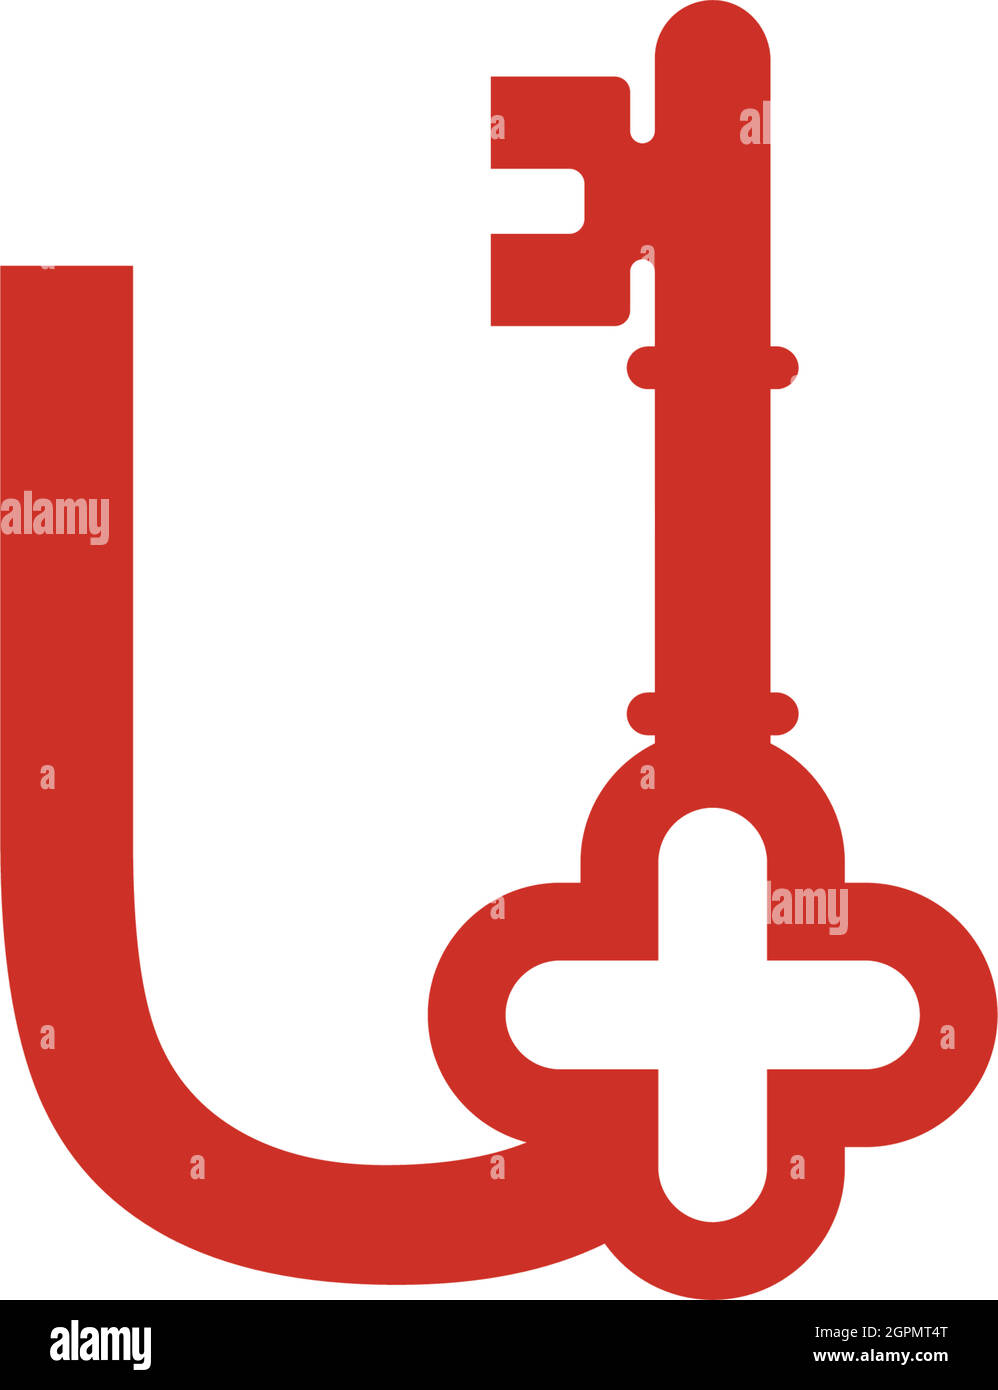 Letter U logo icon with key icon design symbol template Stock Vector